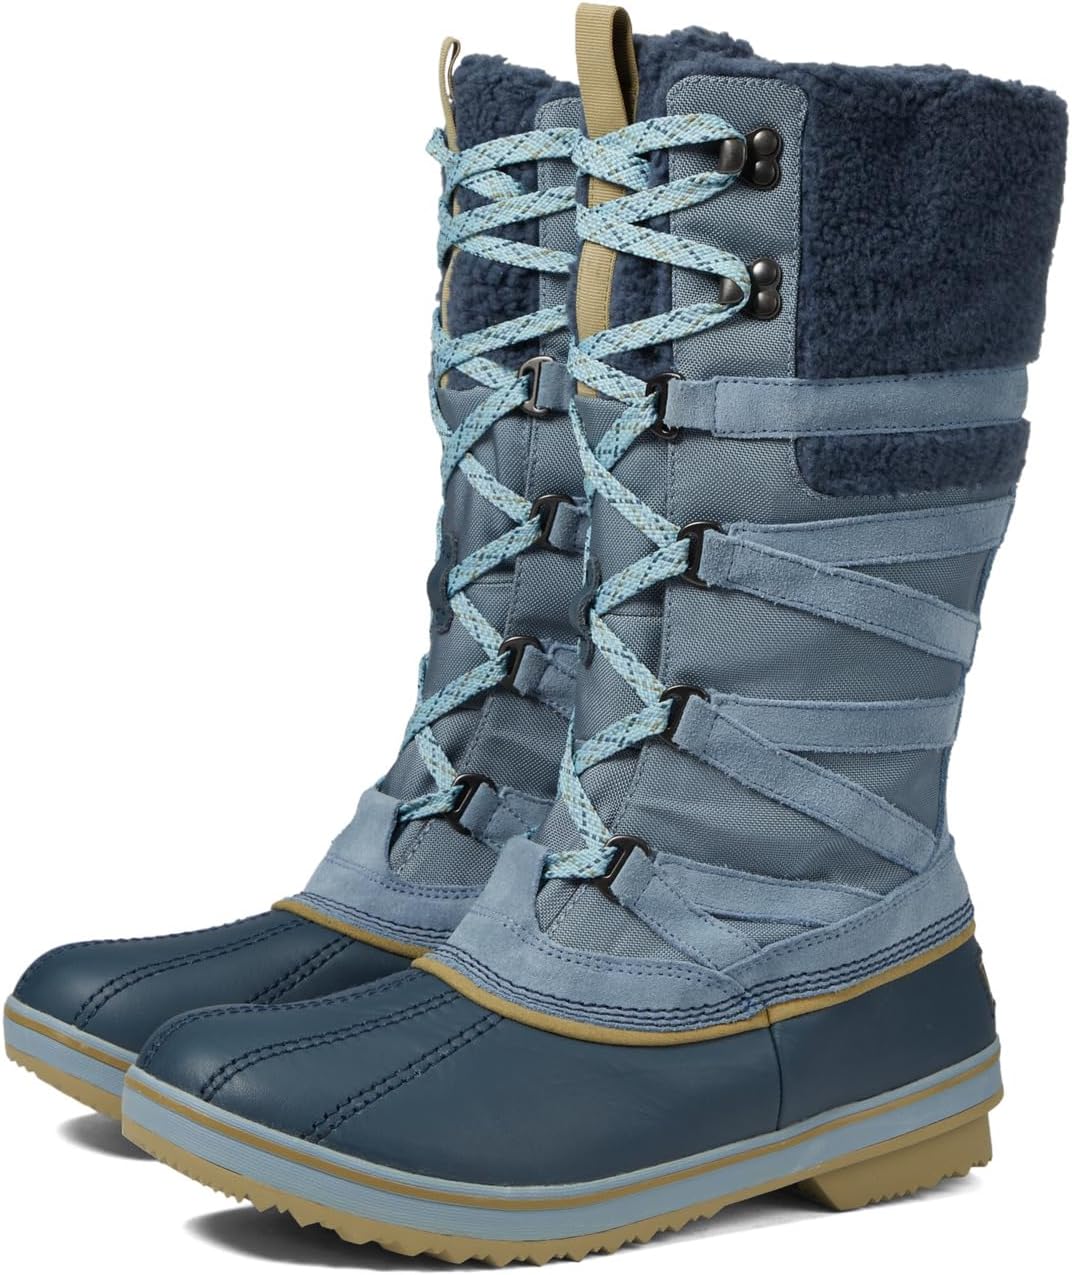 Зимние ботинки Rangeley Pac Boot Tall Water Resistant Insulated L.L.Bean, цвет Steel Blue/Storm Blue